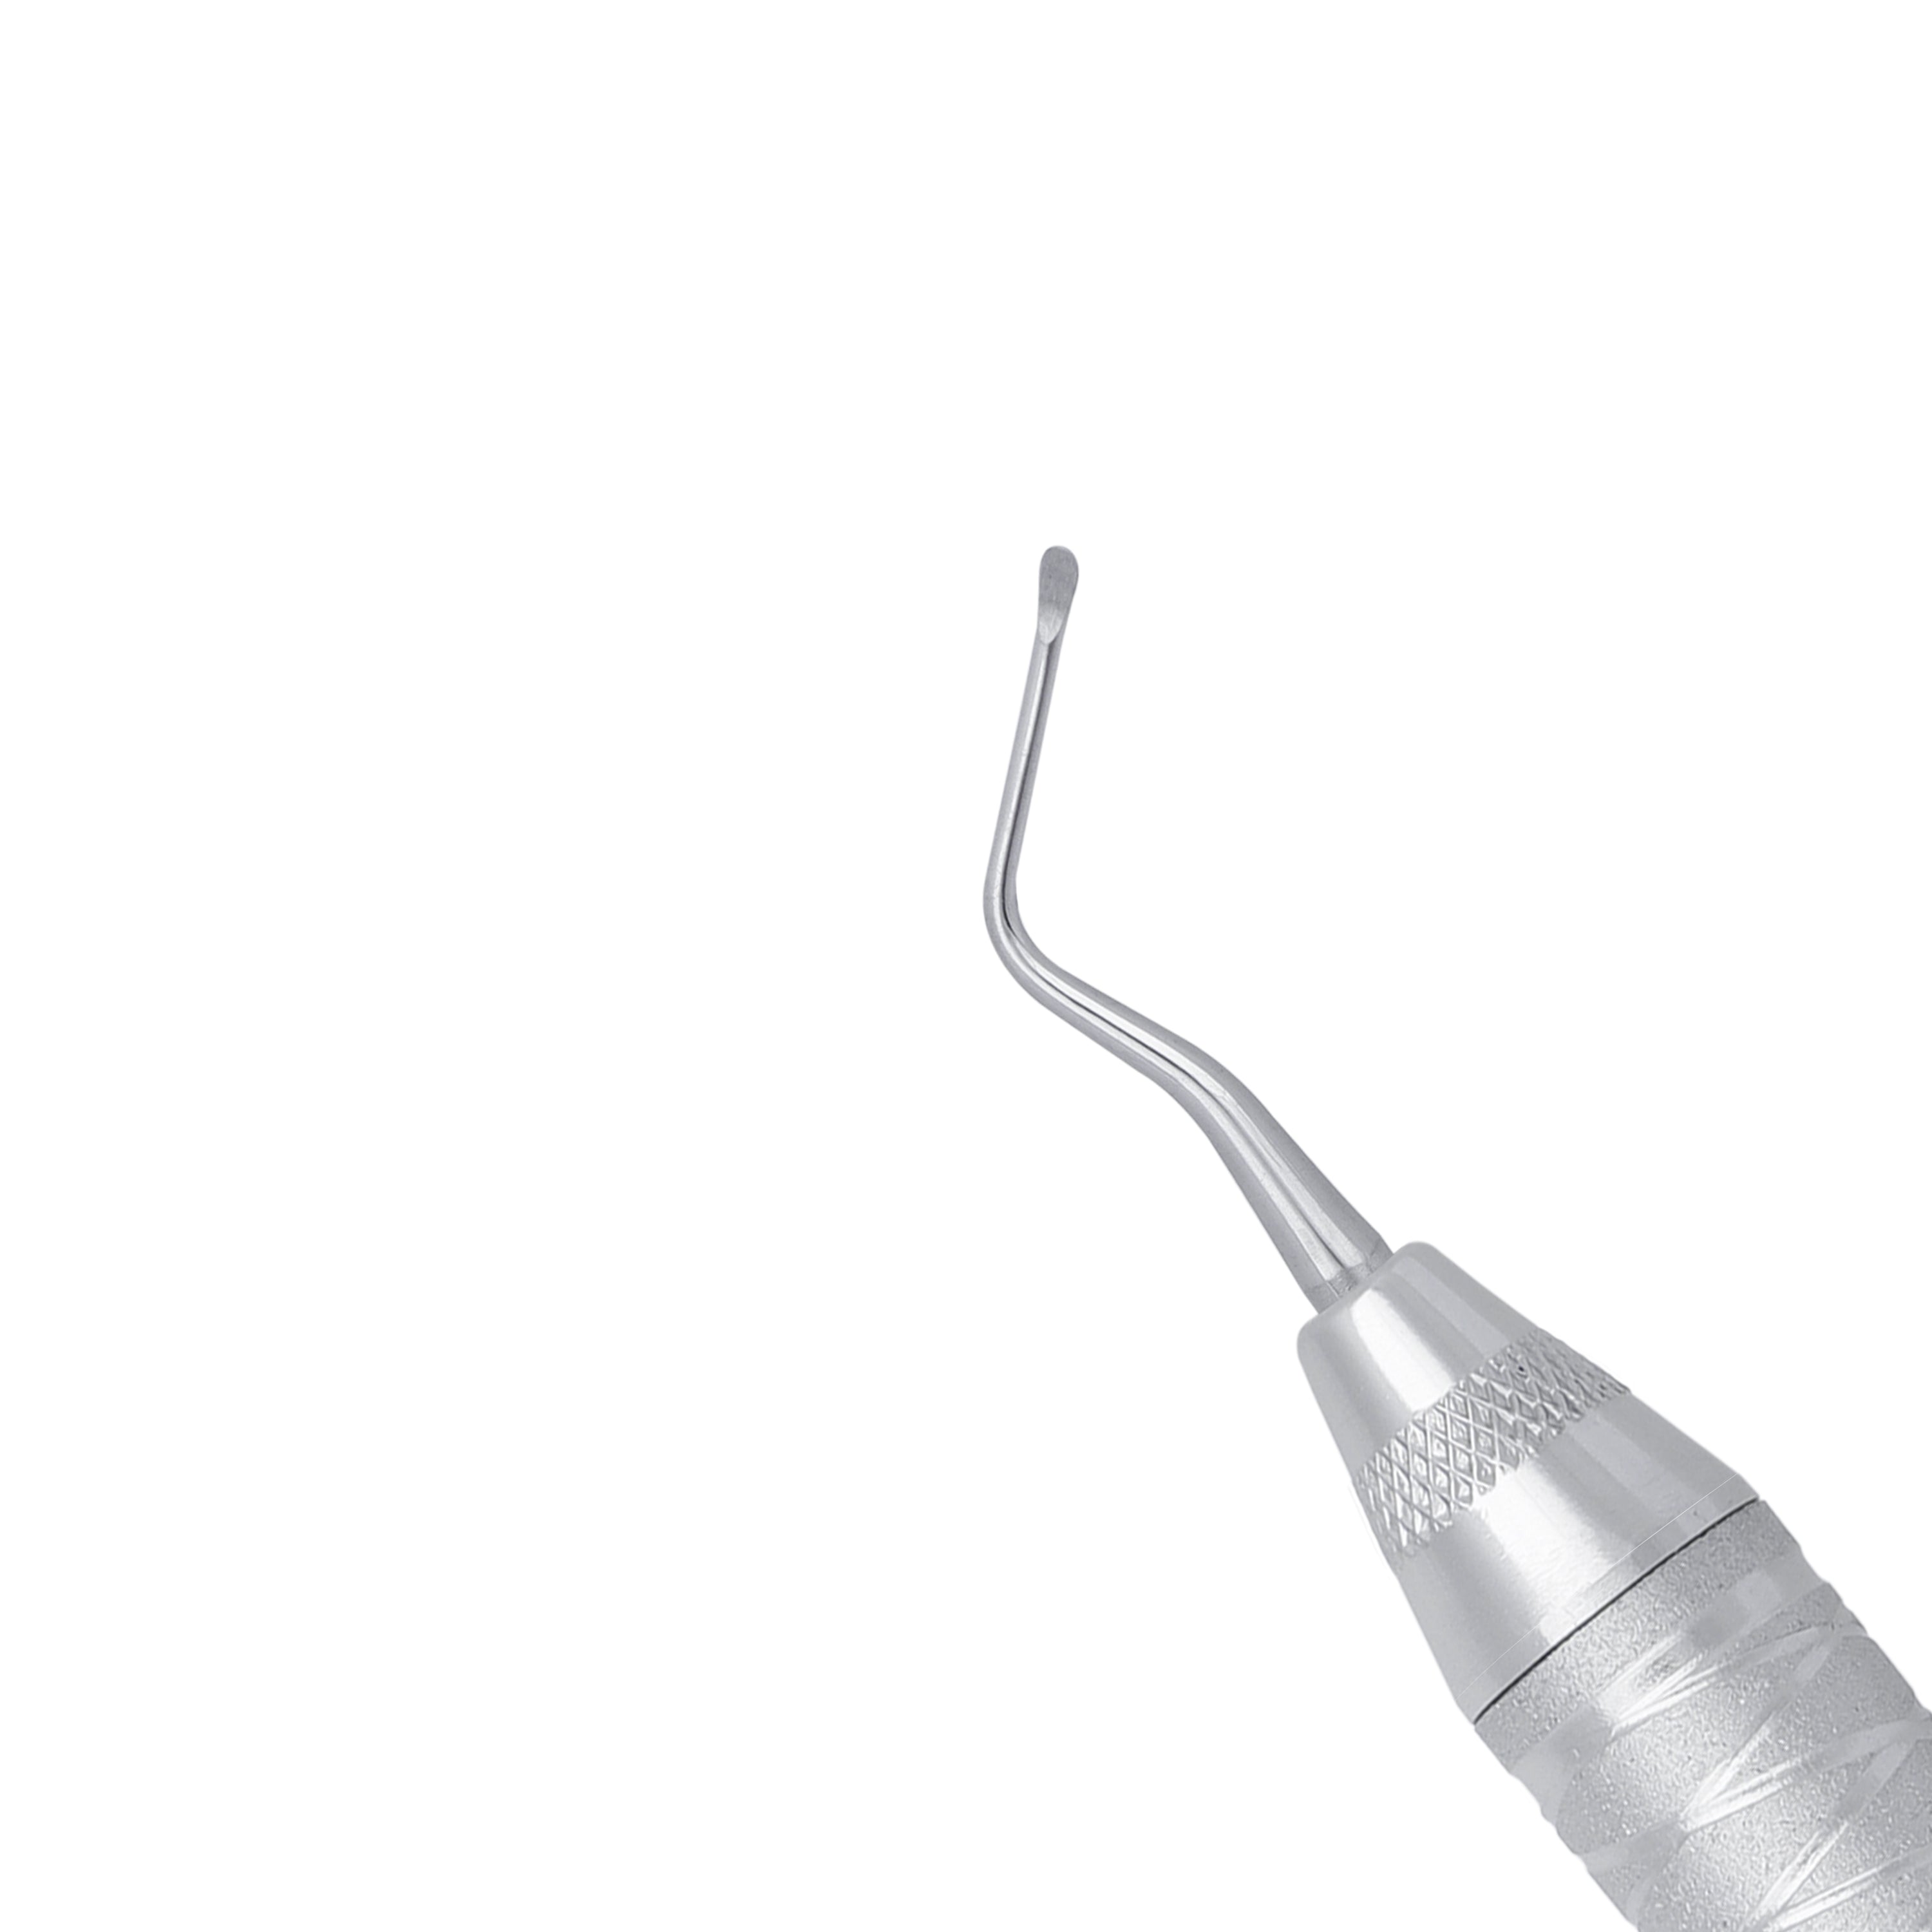 31W Oval Spoon 1.3MM Endodontic Excavator - HiTeck Medical Instruments